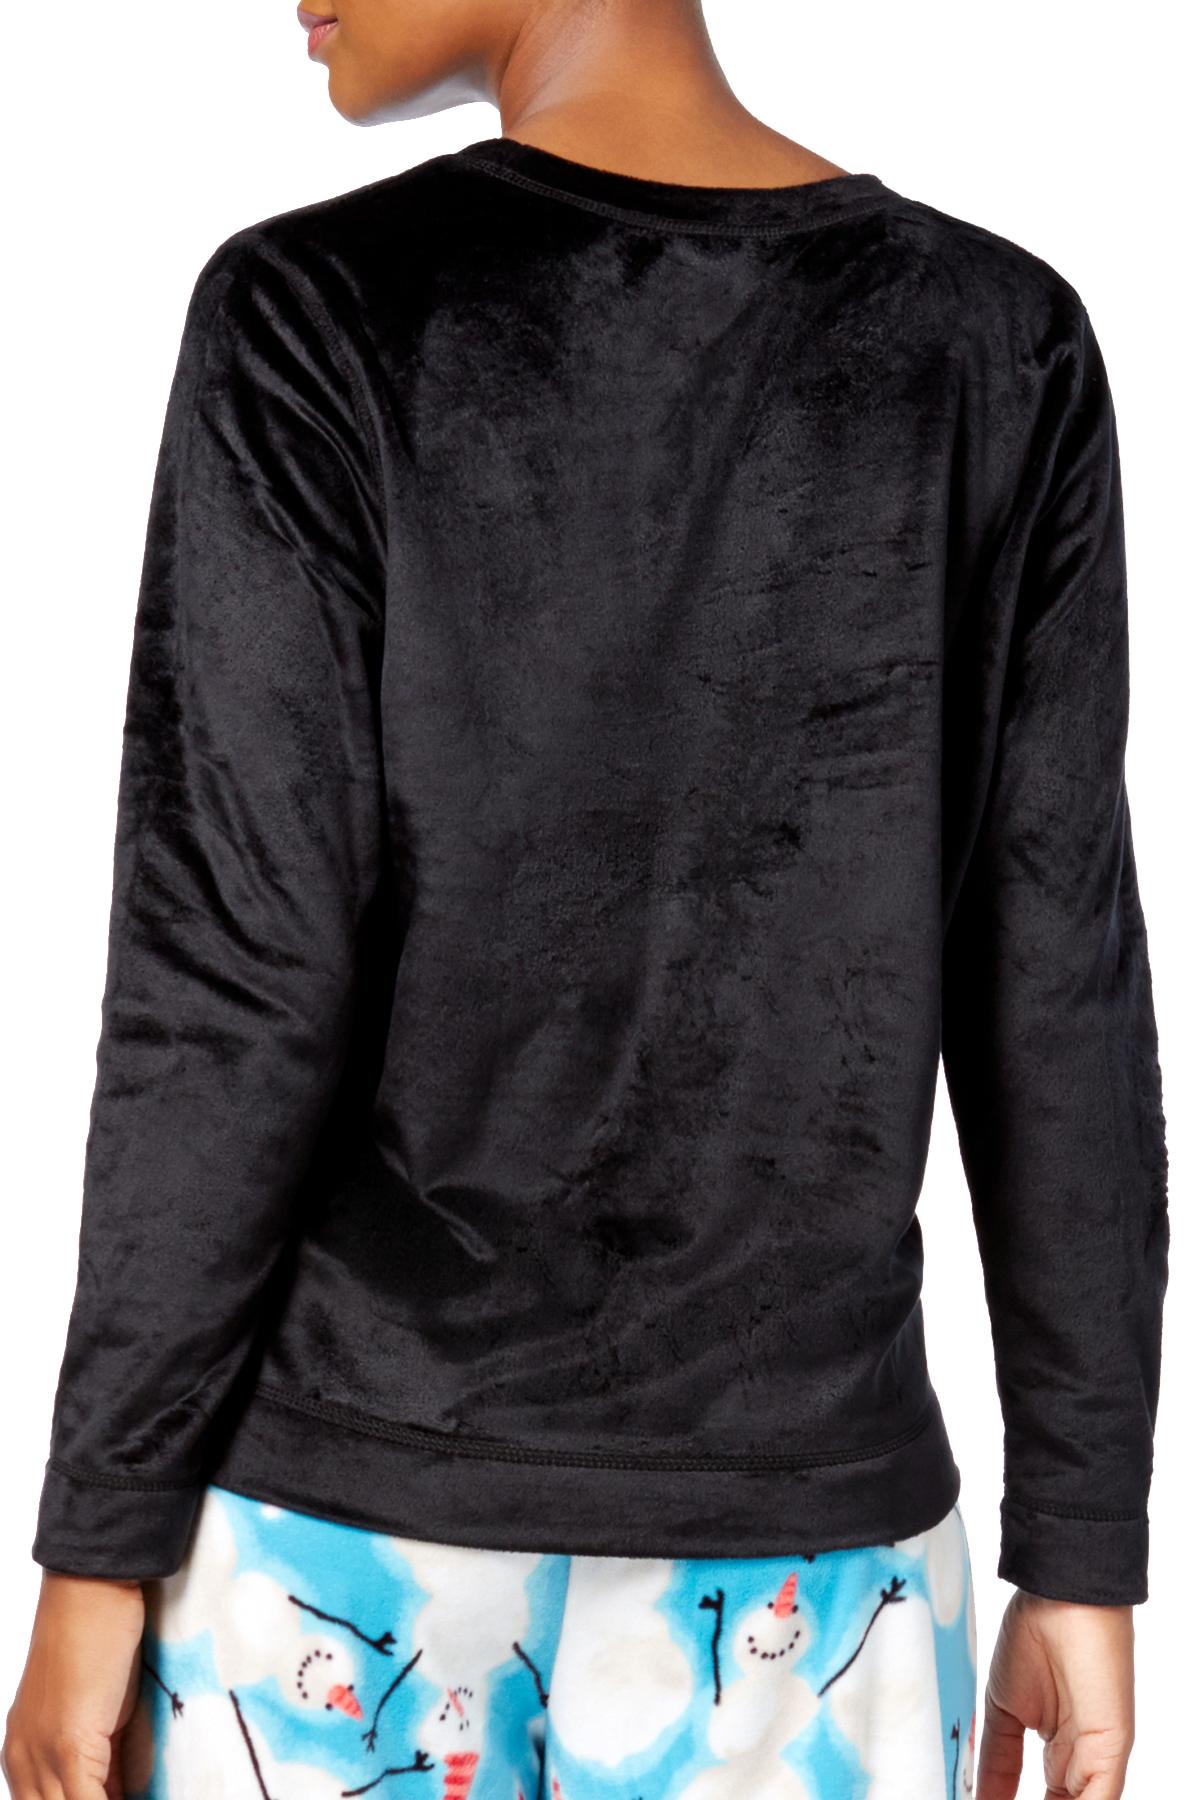 HUE Black Plush Fleece Top and Turquoise Fuzzy Slipper Socks 2-Piece Set